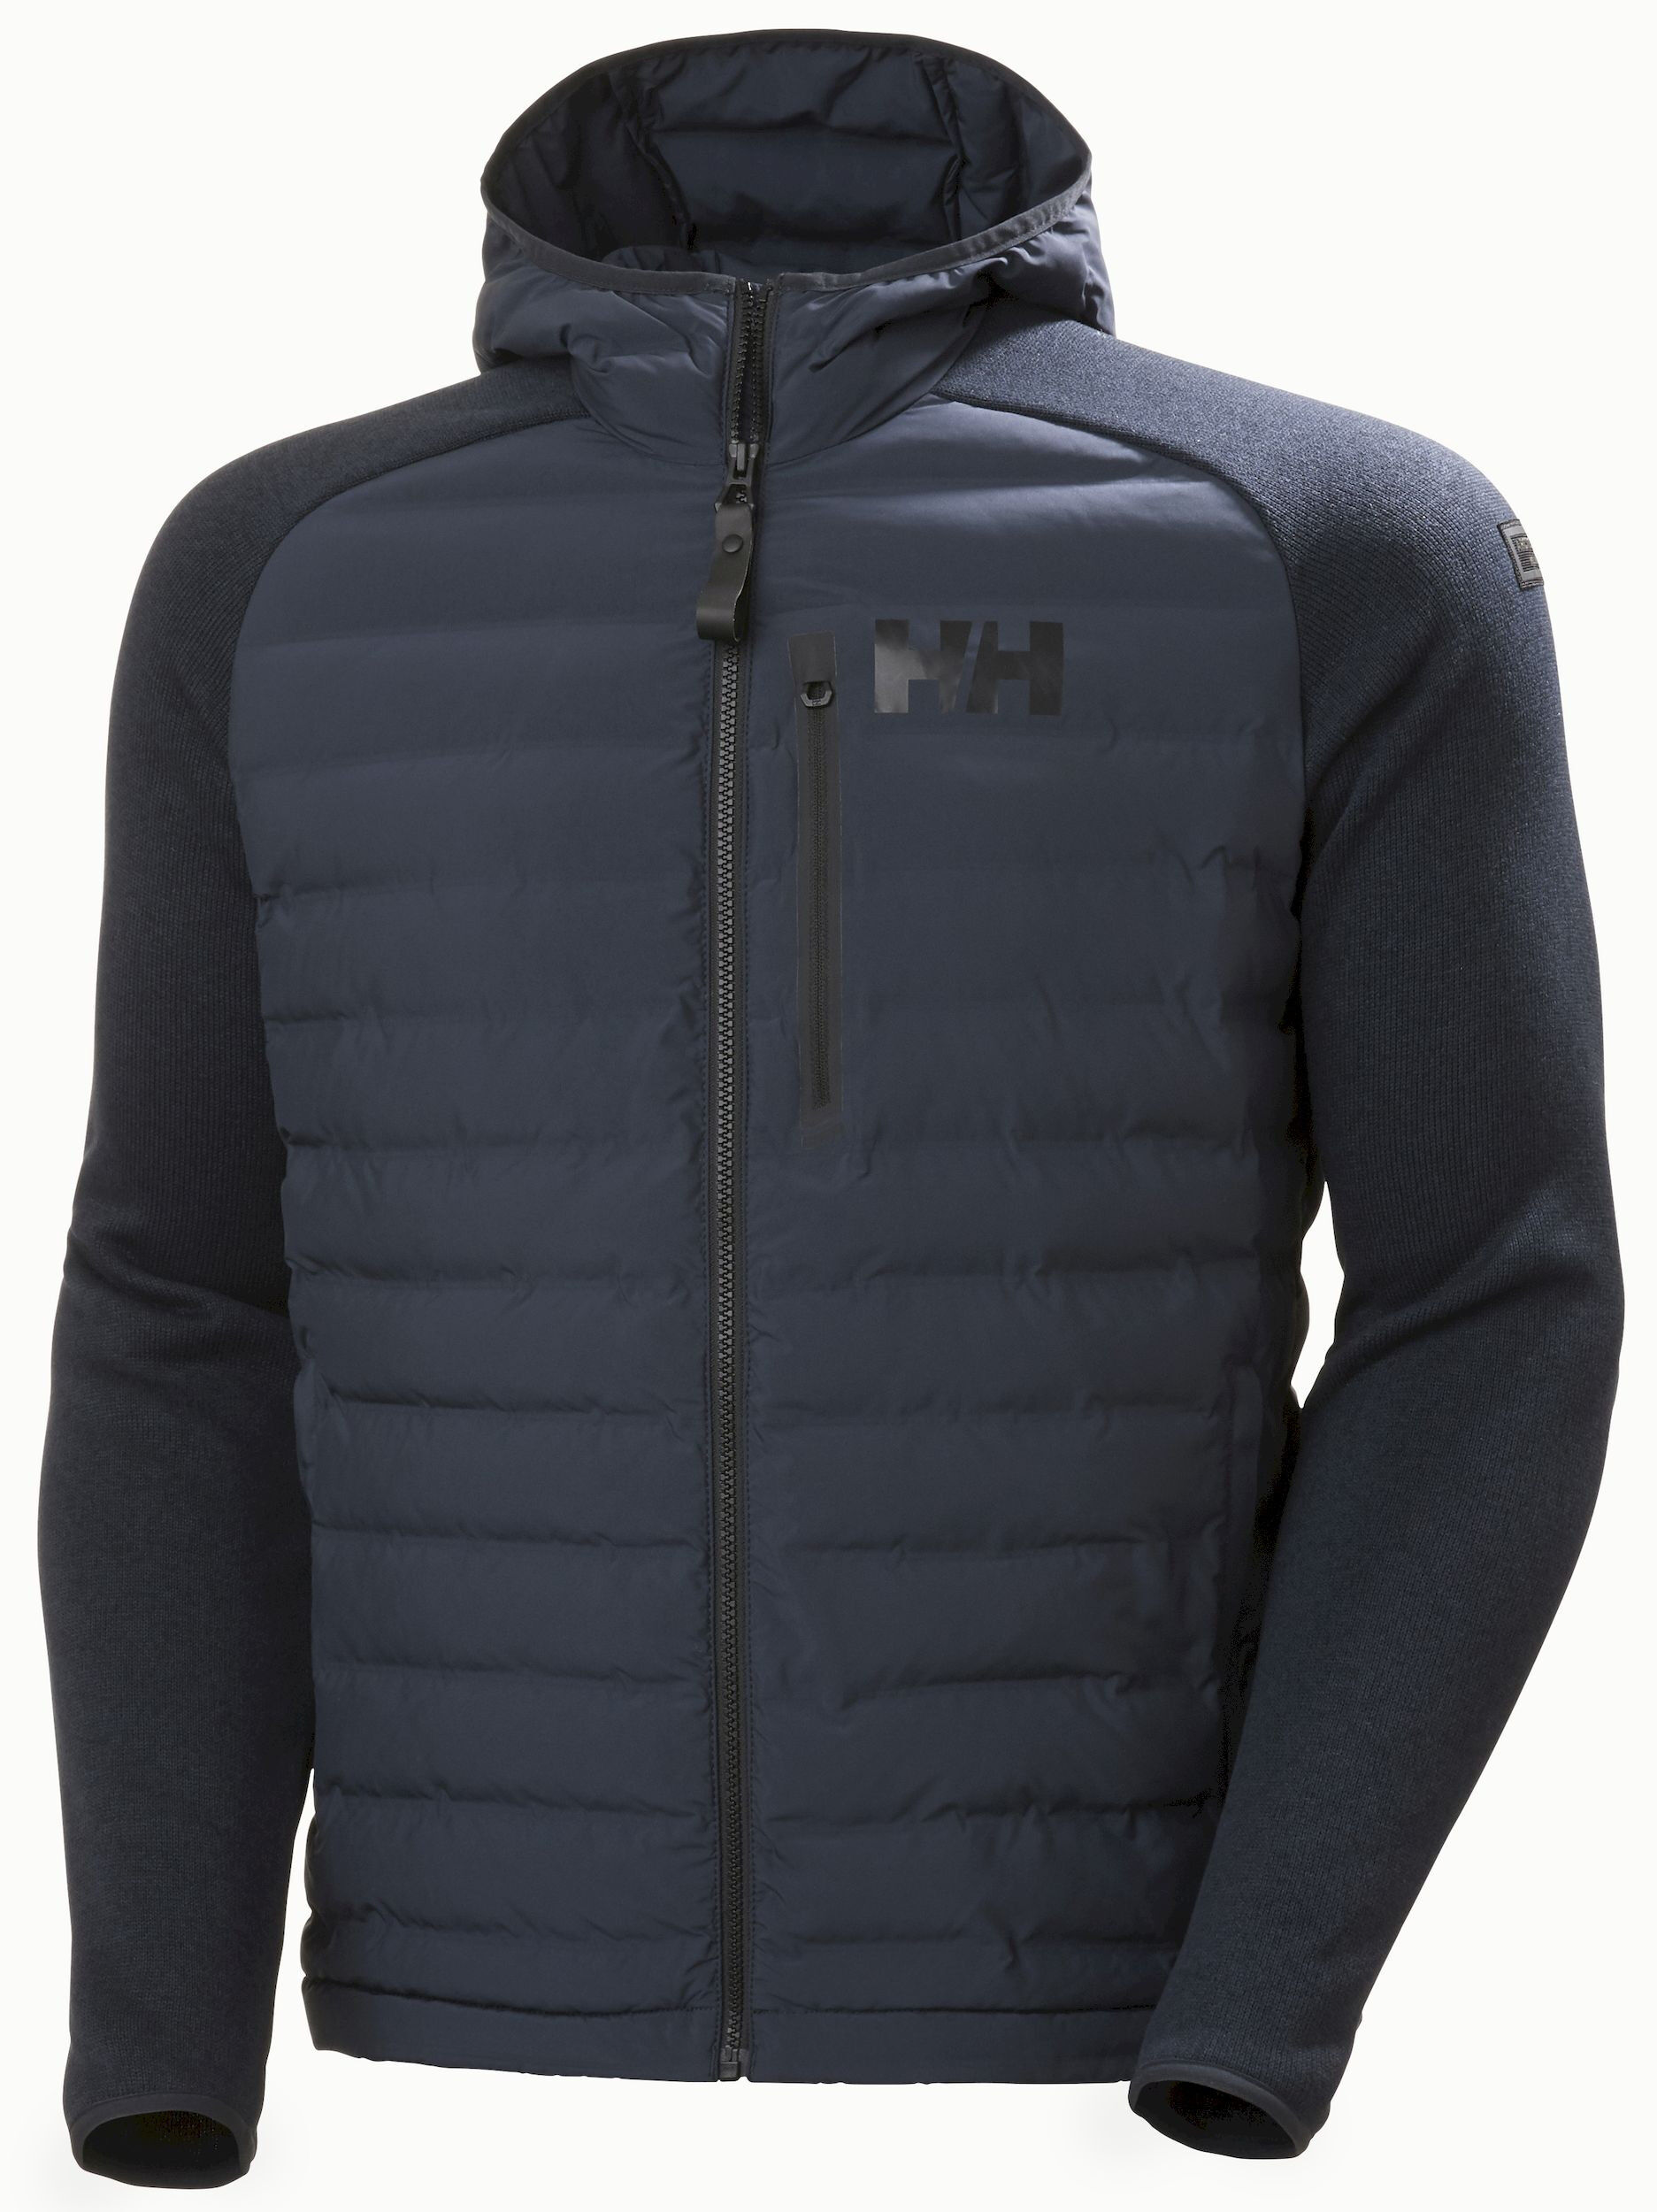 Helly Hansen Arctic Ocean Hybrid Insulator - Synthetic jacket - Men's